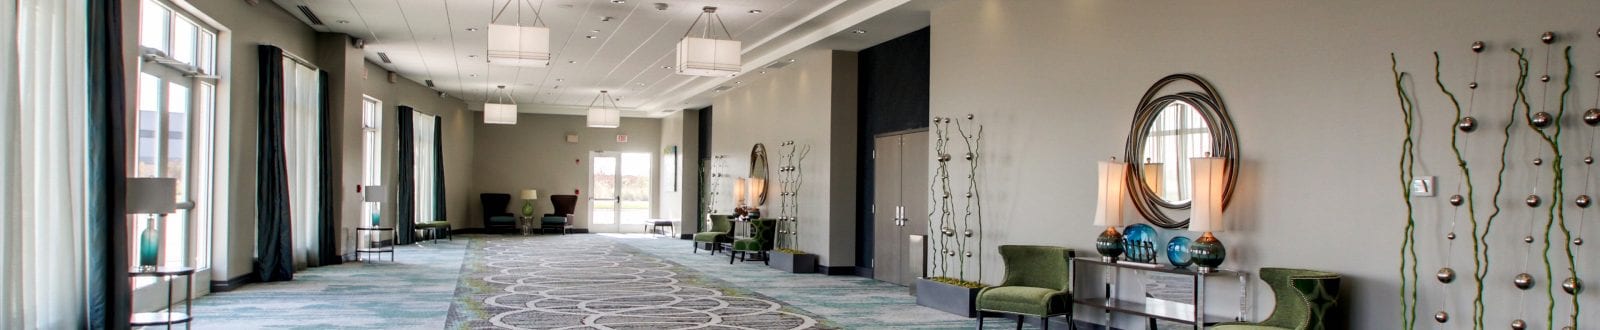 Holiday Inn & Suites Peoria Grand Prairie Ballroom Pre Function Reception Area